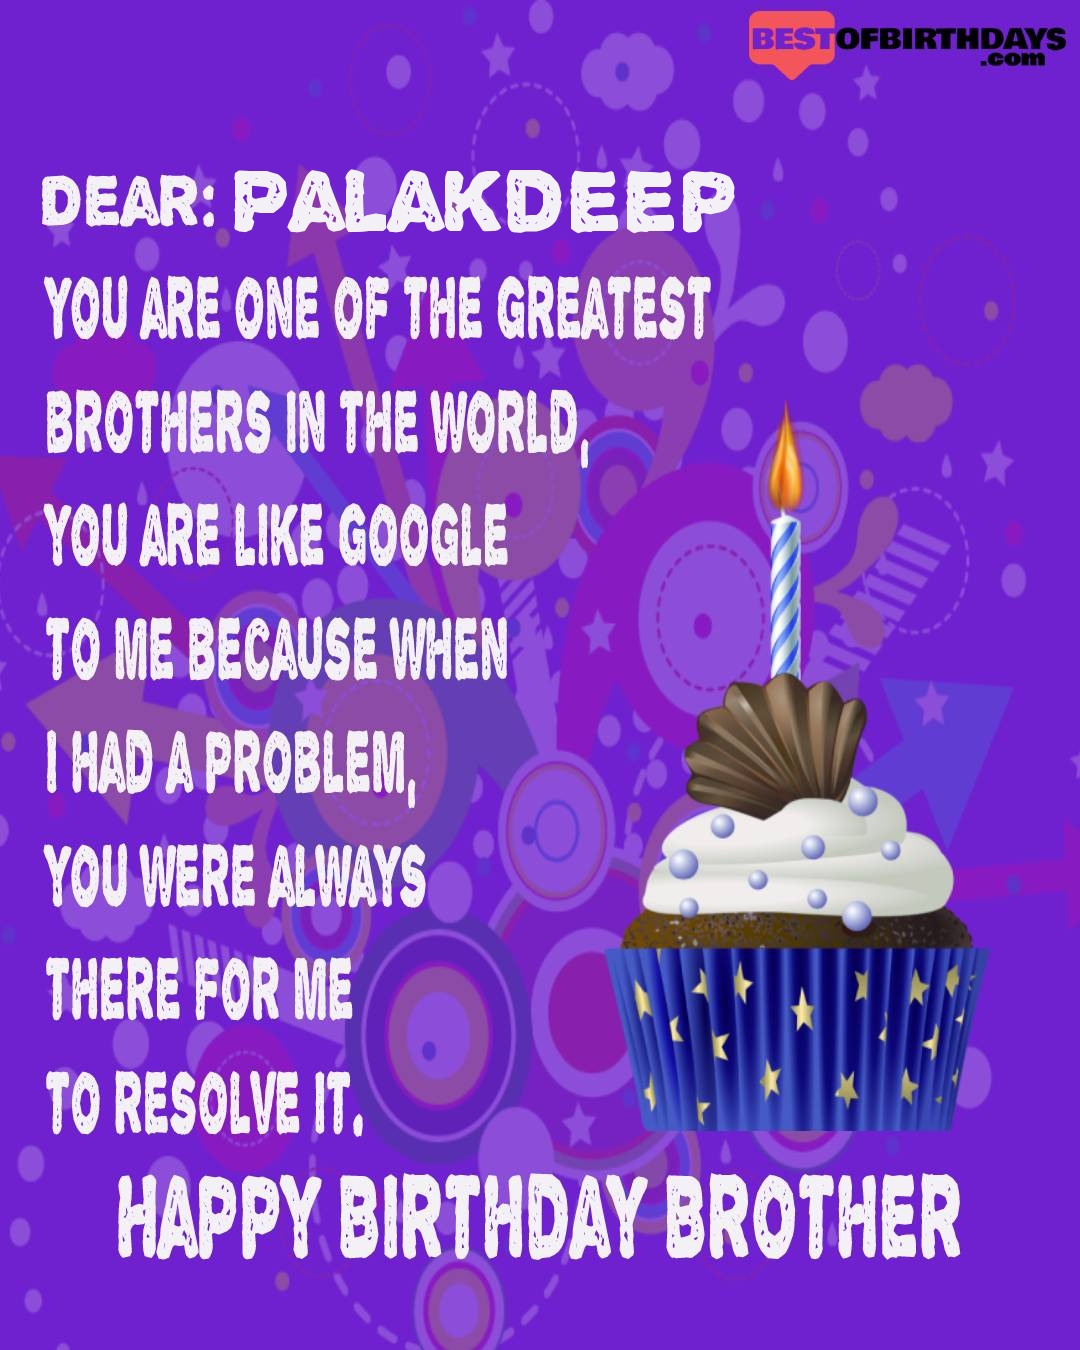 Happy birthday palakdeep bhai brother bro